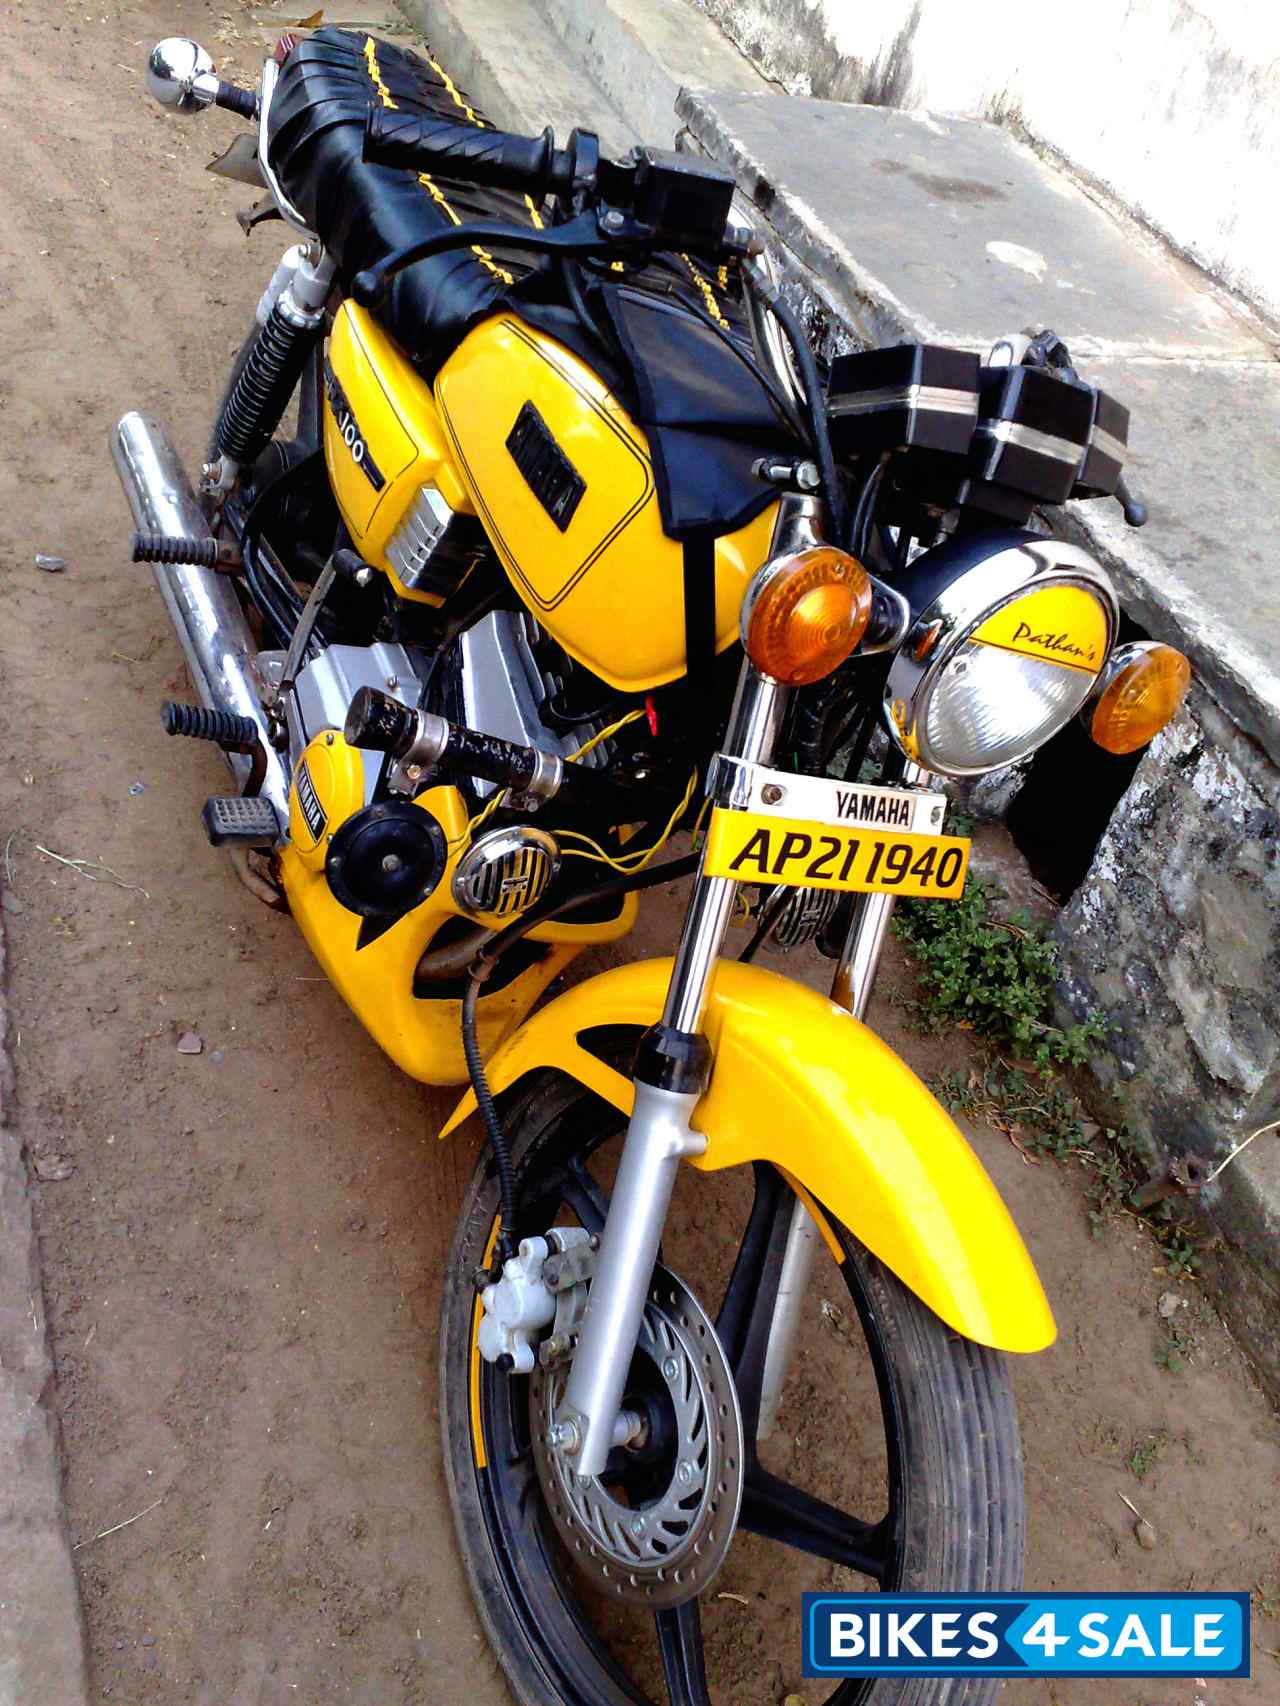 Yamaha Rx Hundred Bike